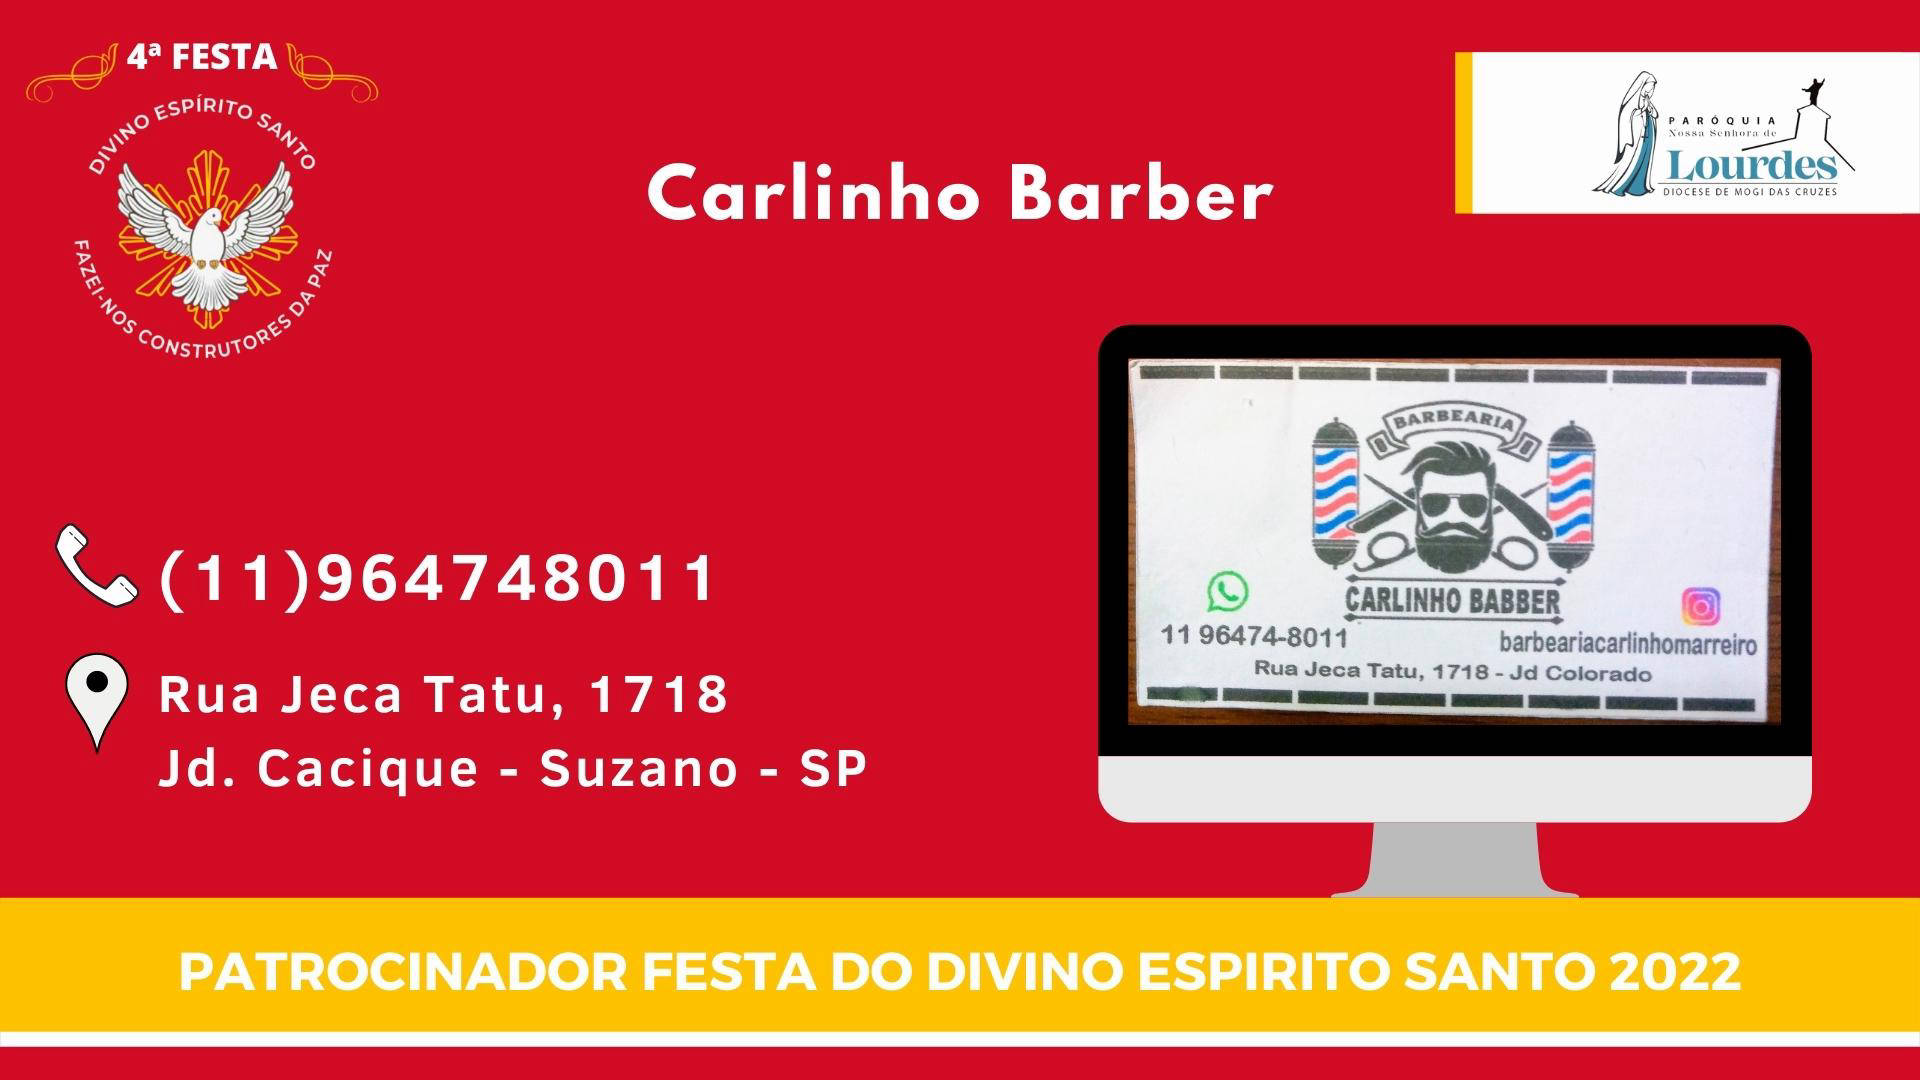 Carlinho Barber